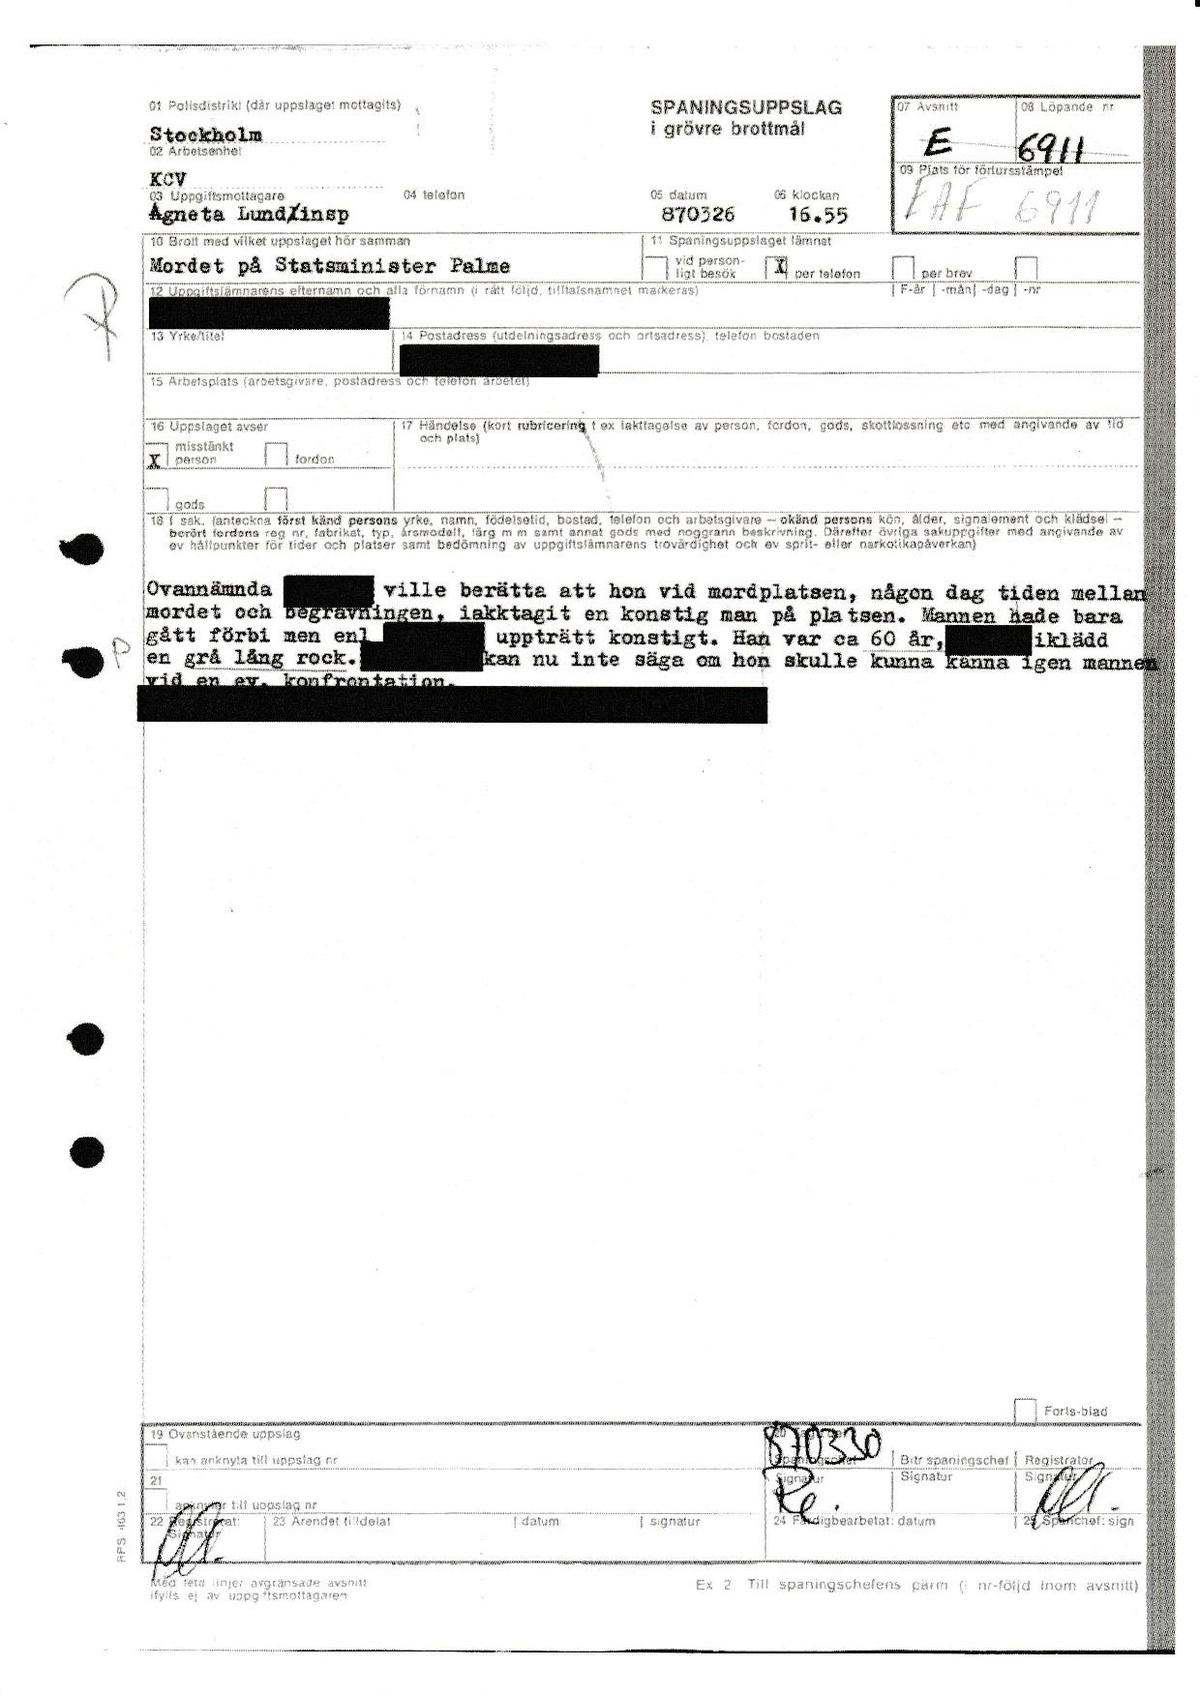 Pol-1987-03-26 EAF6911-00 UL iakttog en konstig man vid mordplatsen.pdf